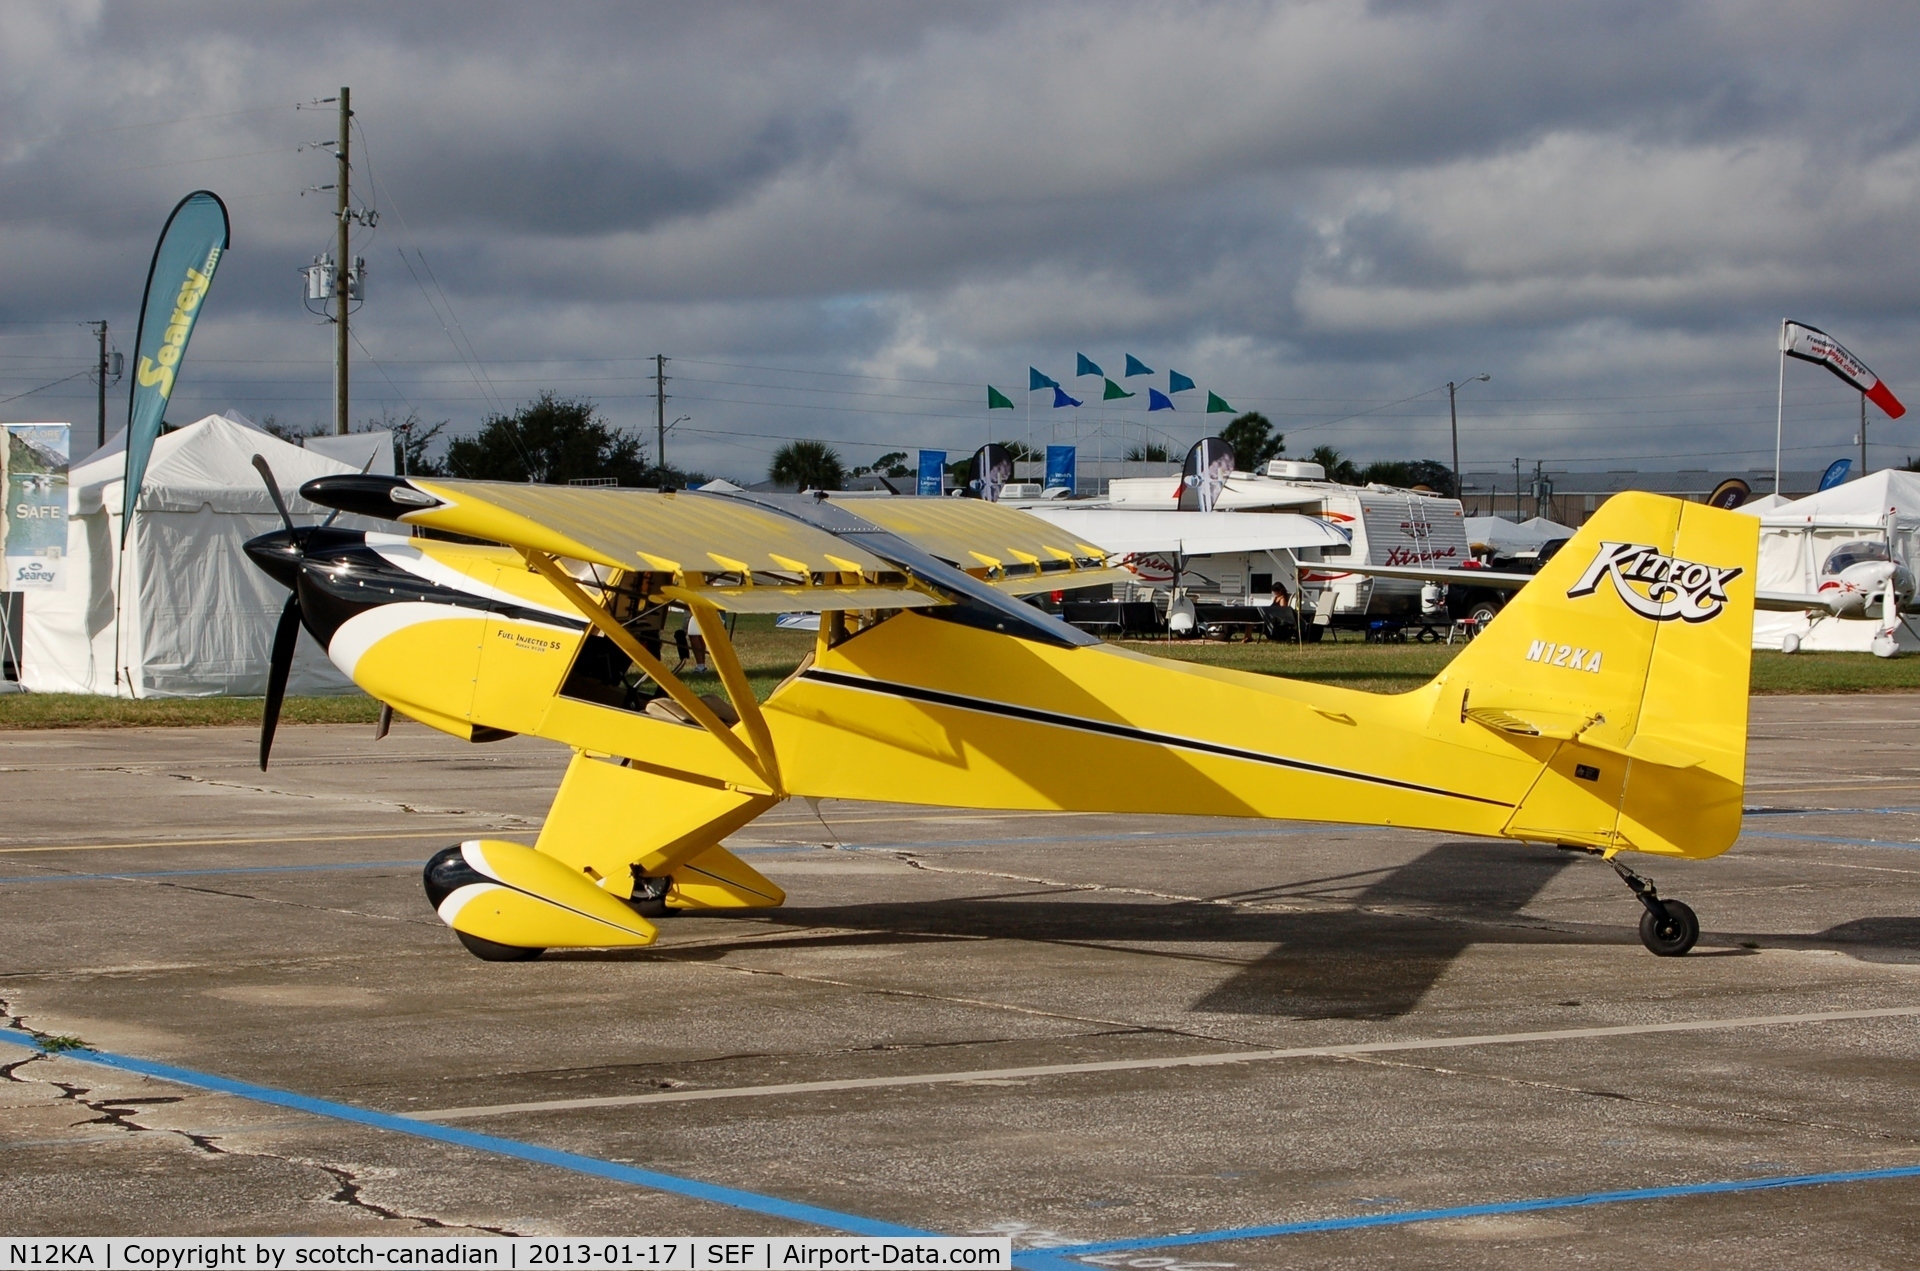 N12KA, 2010 Kitfox Aircraft Super Sport C/N KA0706003, John McBean Kitfox Super Sport, N12KA, at the US Sport Aviation Expo, Sebring Regional Airport, Sebring, FL